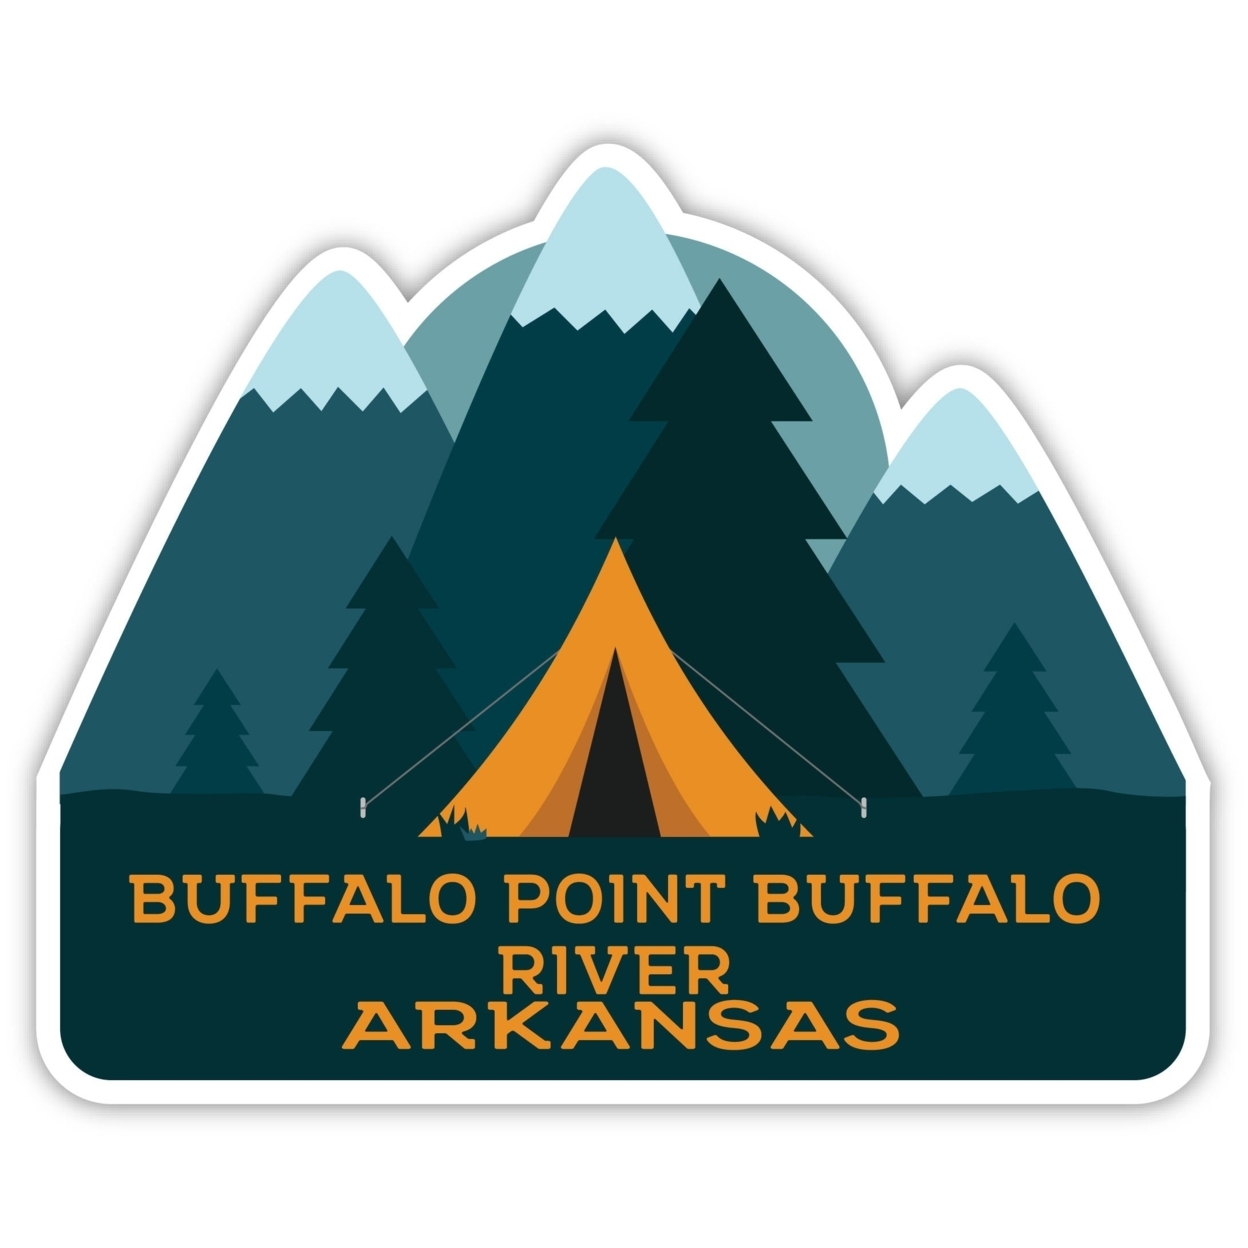 Buffalo Point Buffalo River Arkansas Souvenir Decorative Stickers (Choose Theme And Size) - 4-Pack, 12-Inch, Tent